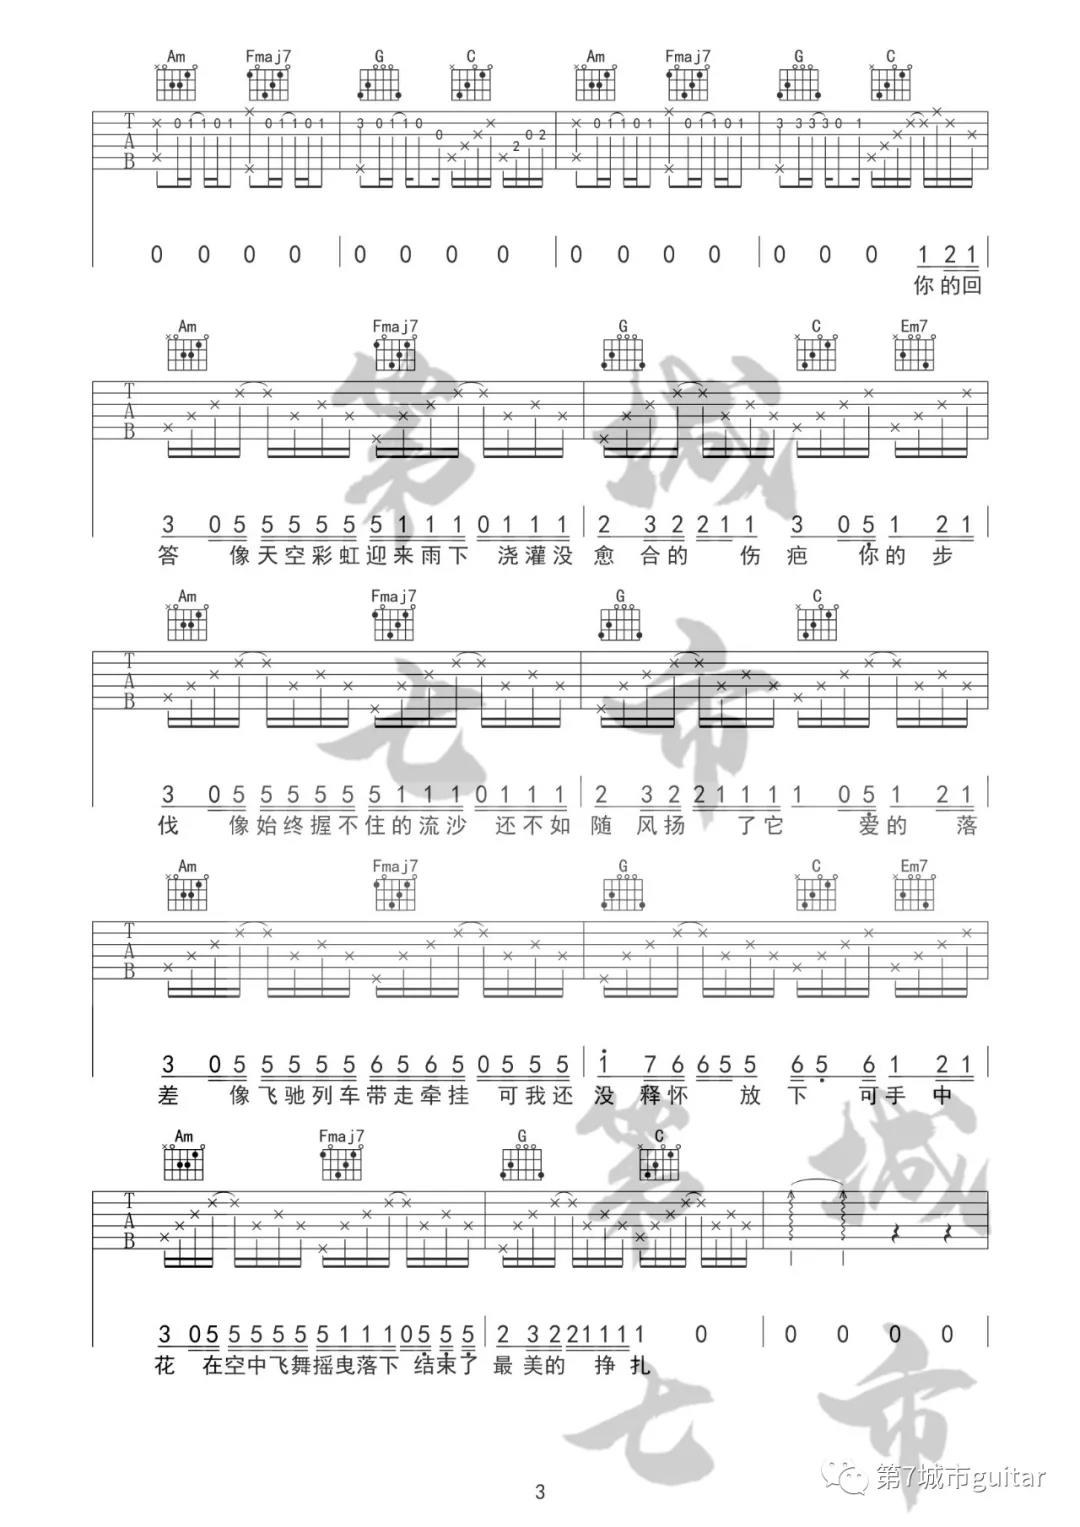 IN-K,王忻辰《落差》吉他谱(F调)-Guitar Music Score